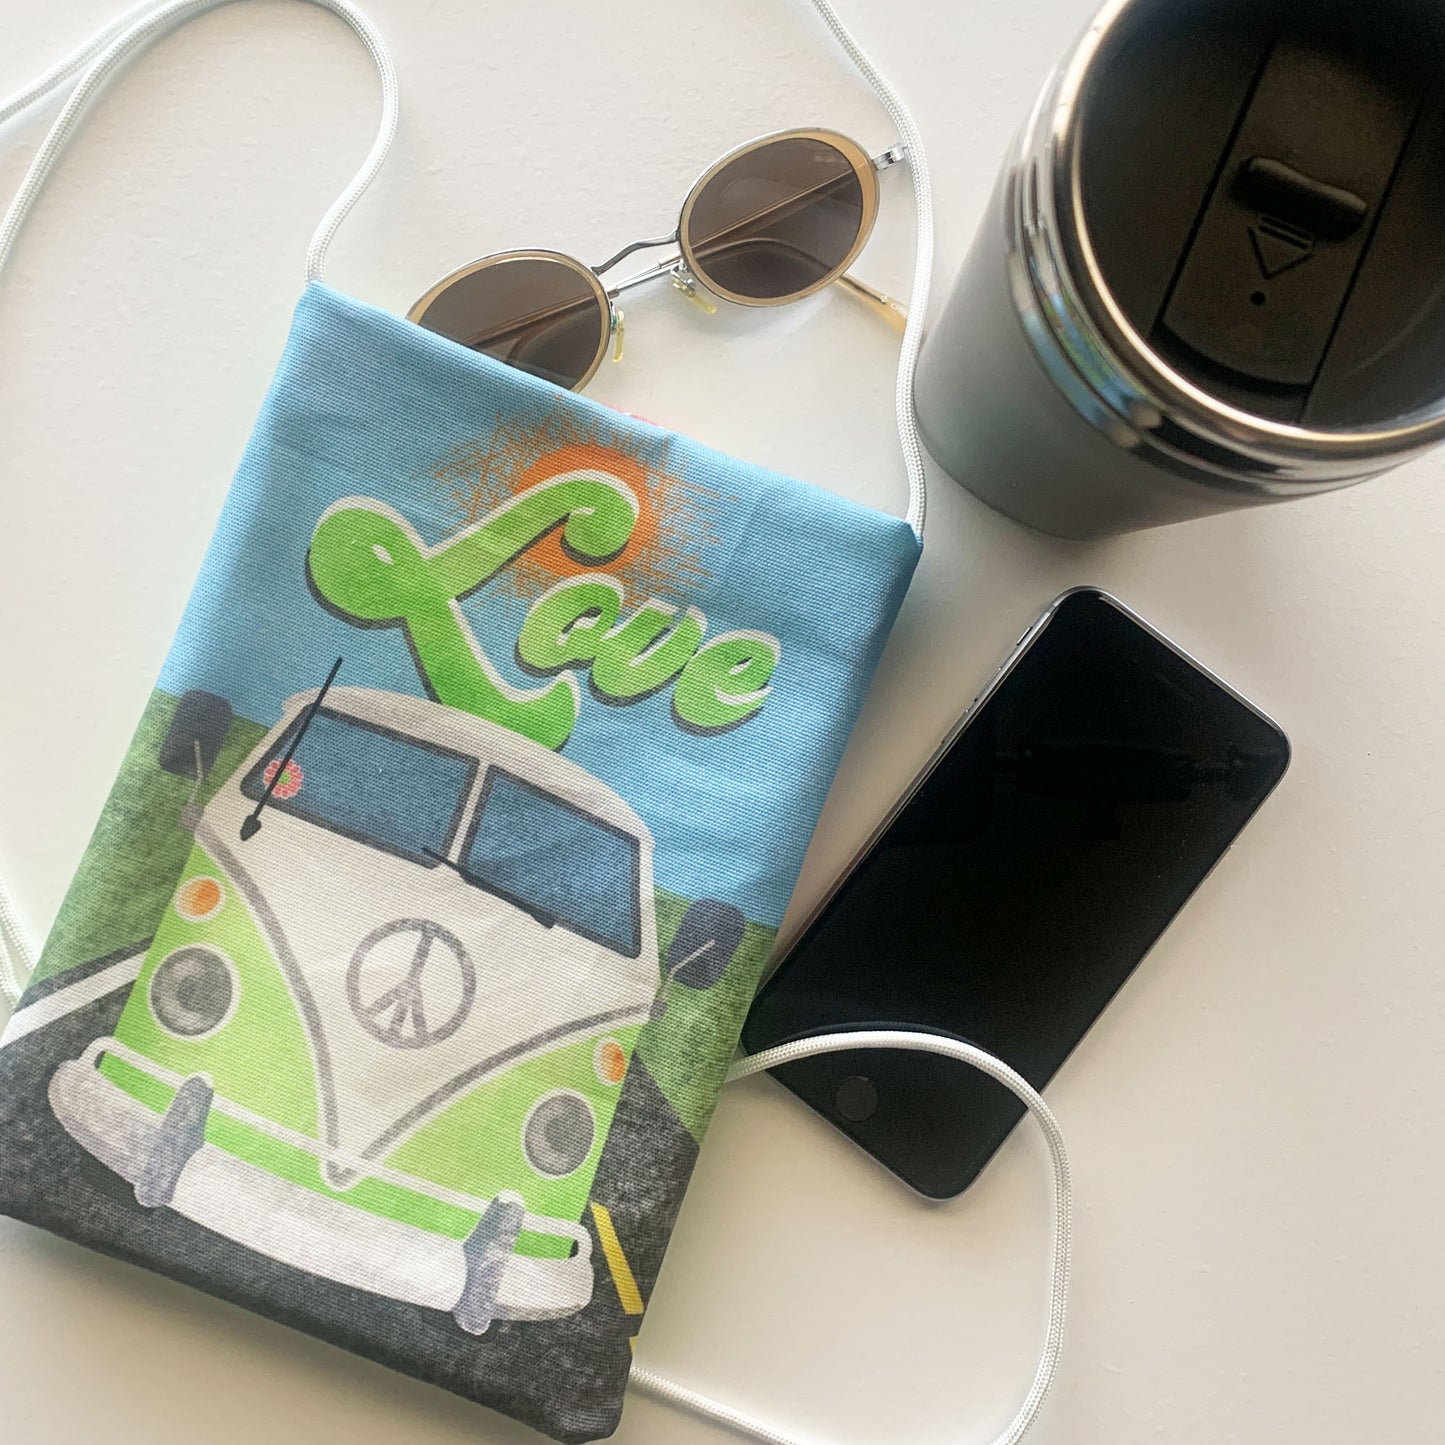 SERENA - Handmade purse with hippie bus VW van theme